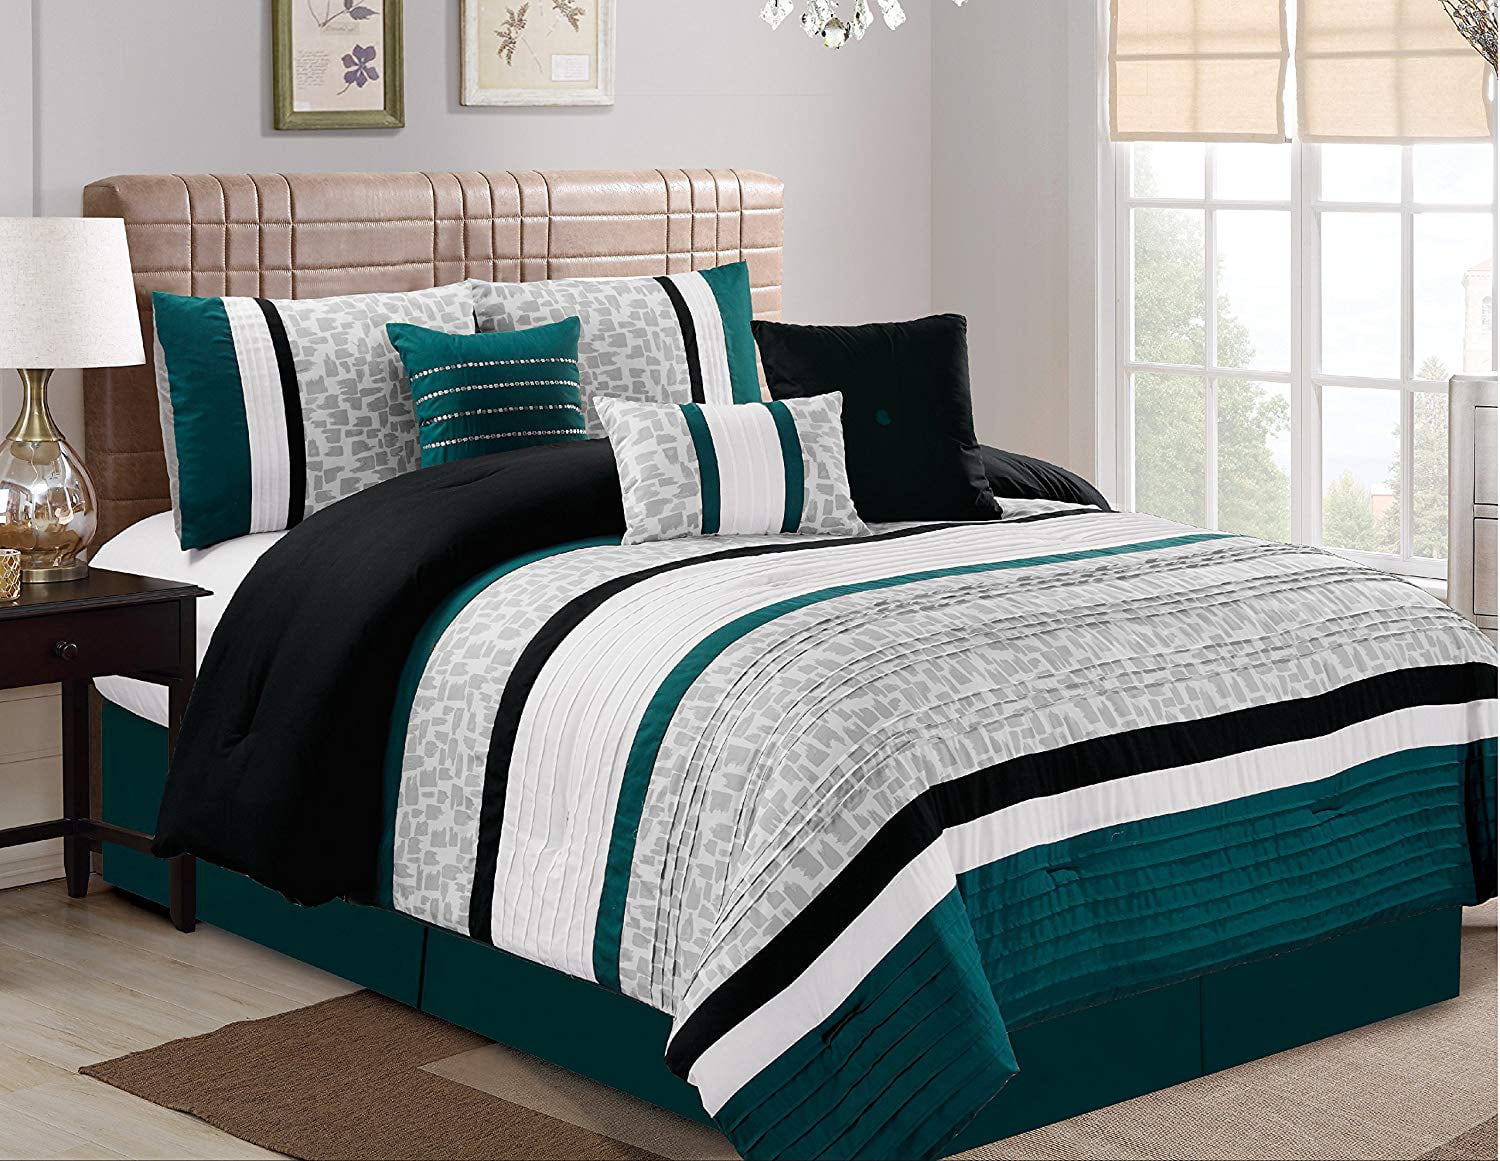 Hgmart Bedding Comforter Set 7 Piece, Oversized Comforters For California King Bed